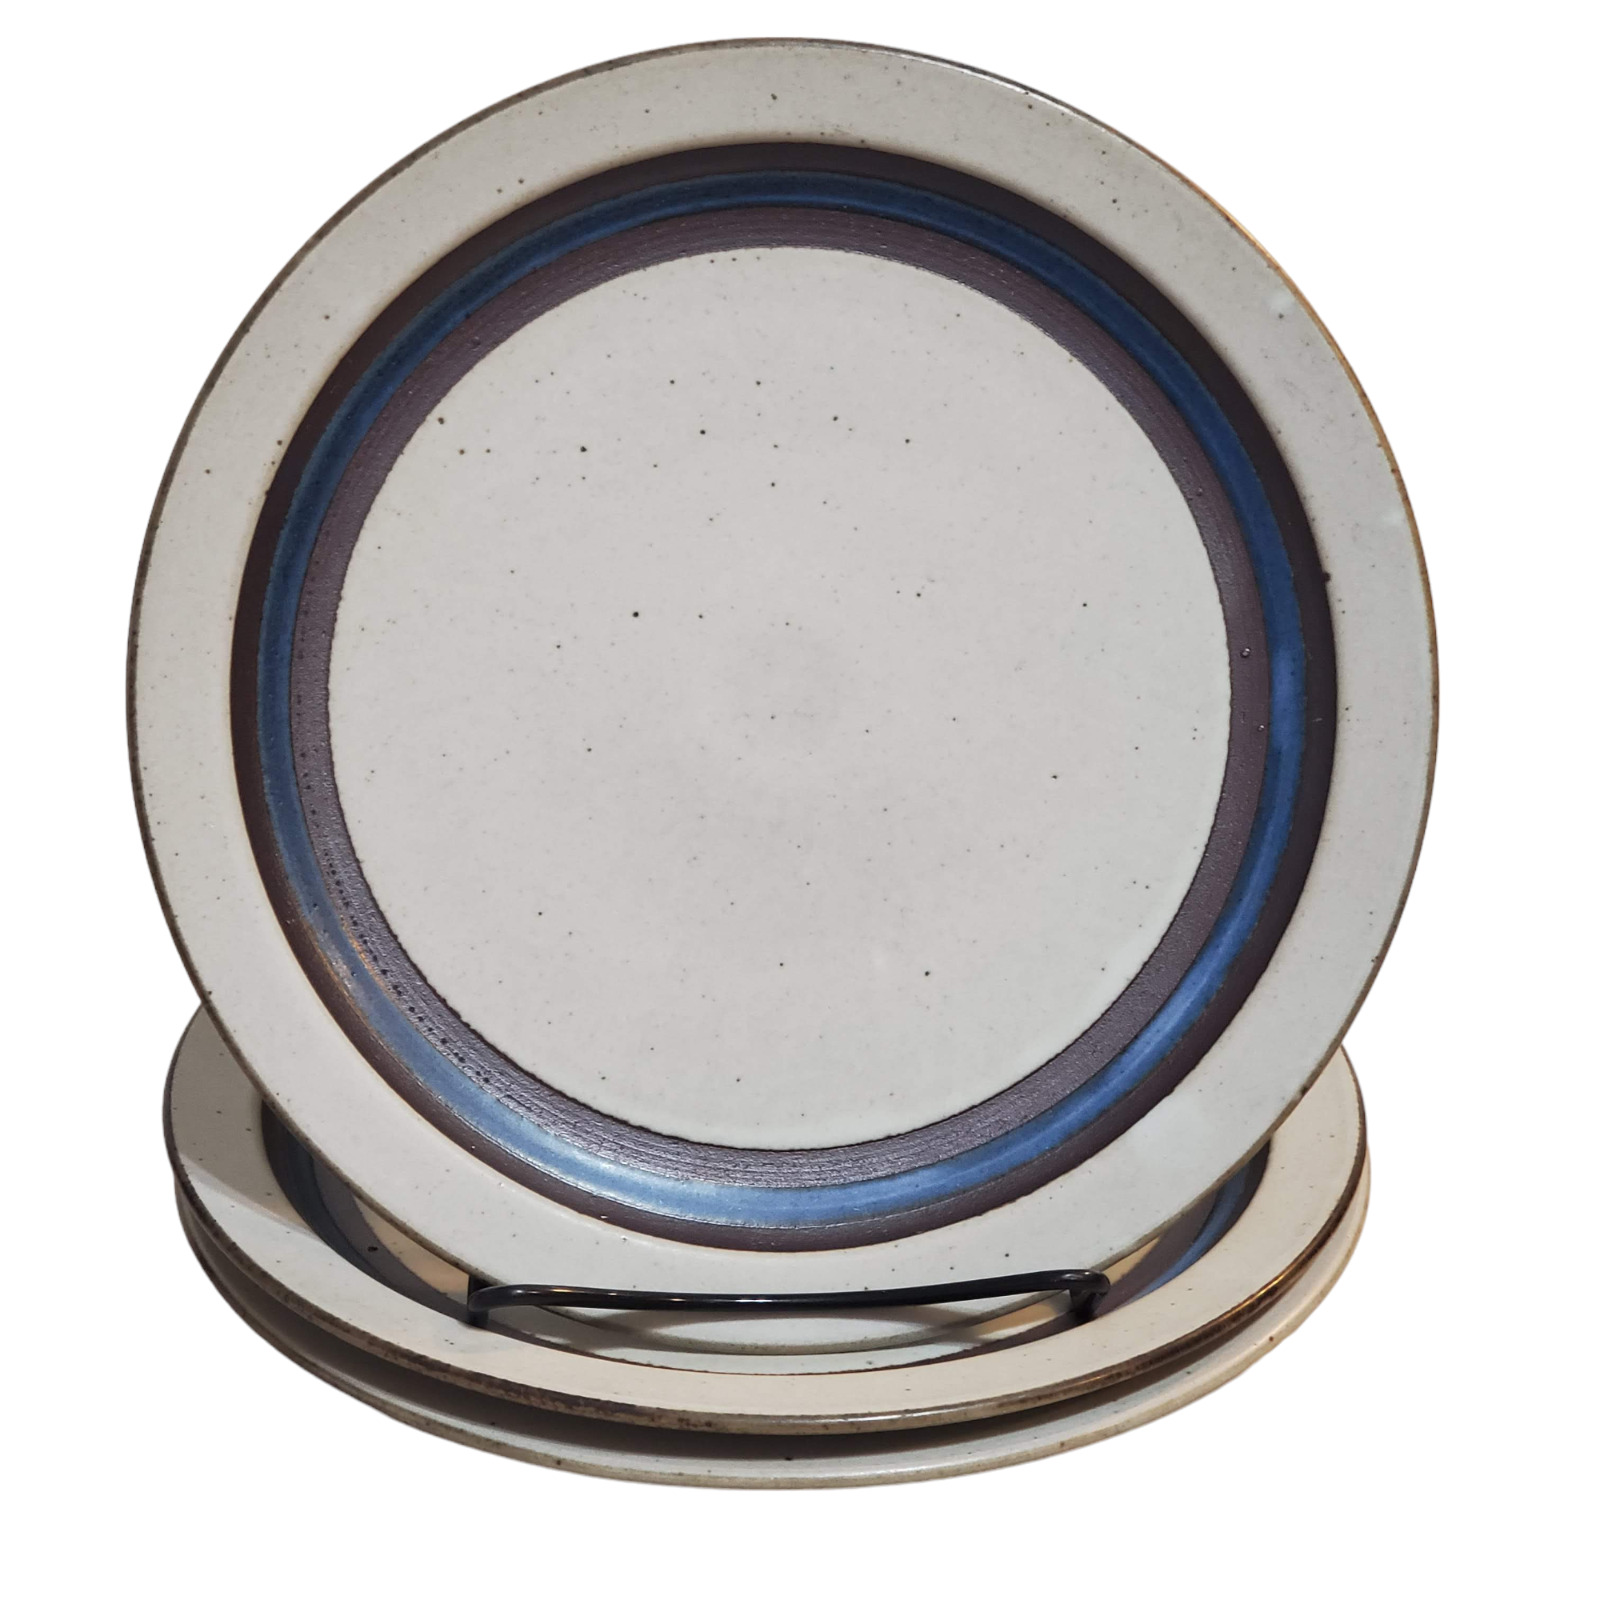 3 Otagiri Horizon 10.5” Dinner Plates Mid Century Modern Japan Stoneware Blue